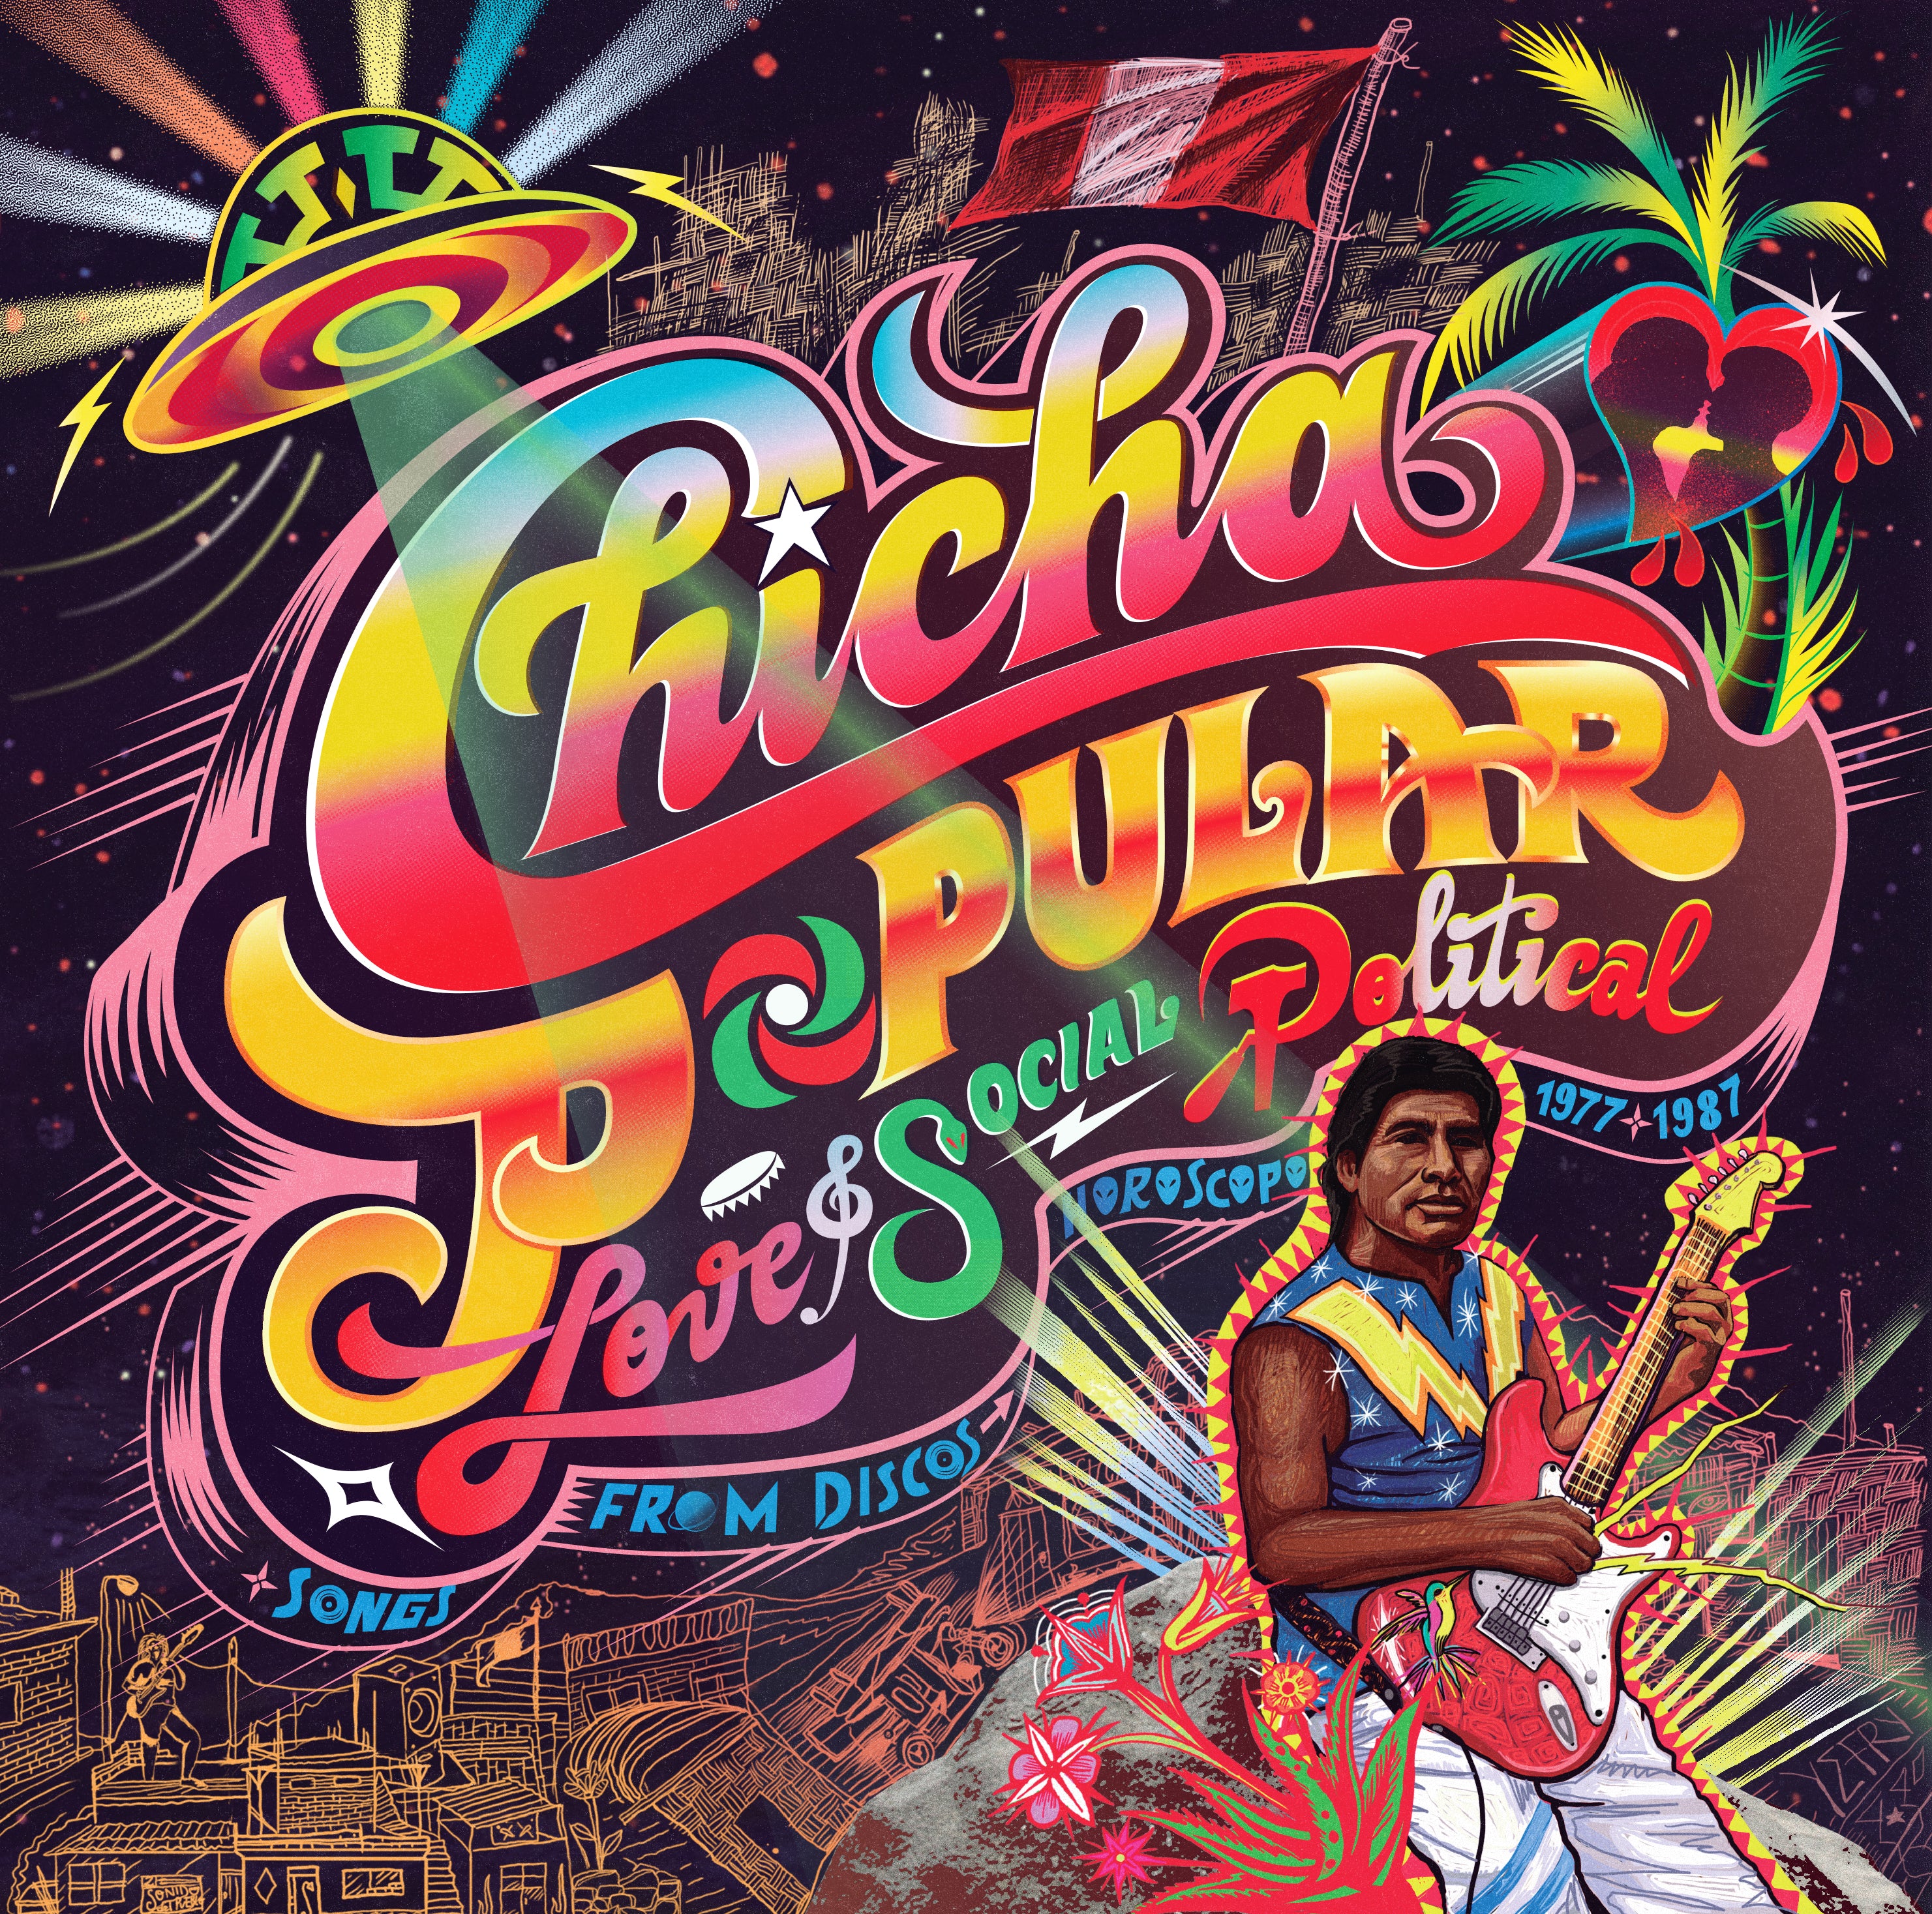 Chicha Popular - Love & Social Political Songs from Discos Horóscopo - 2LP